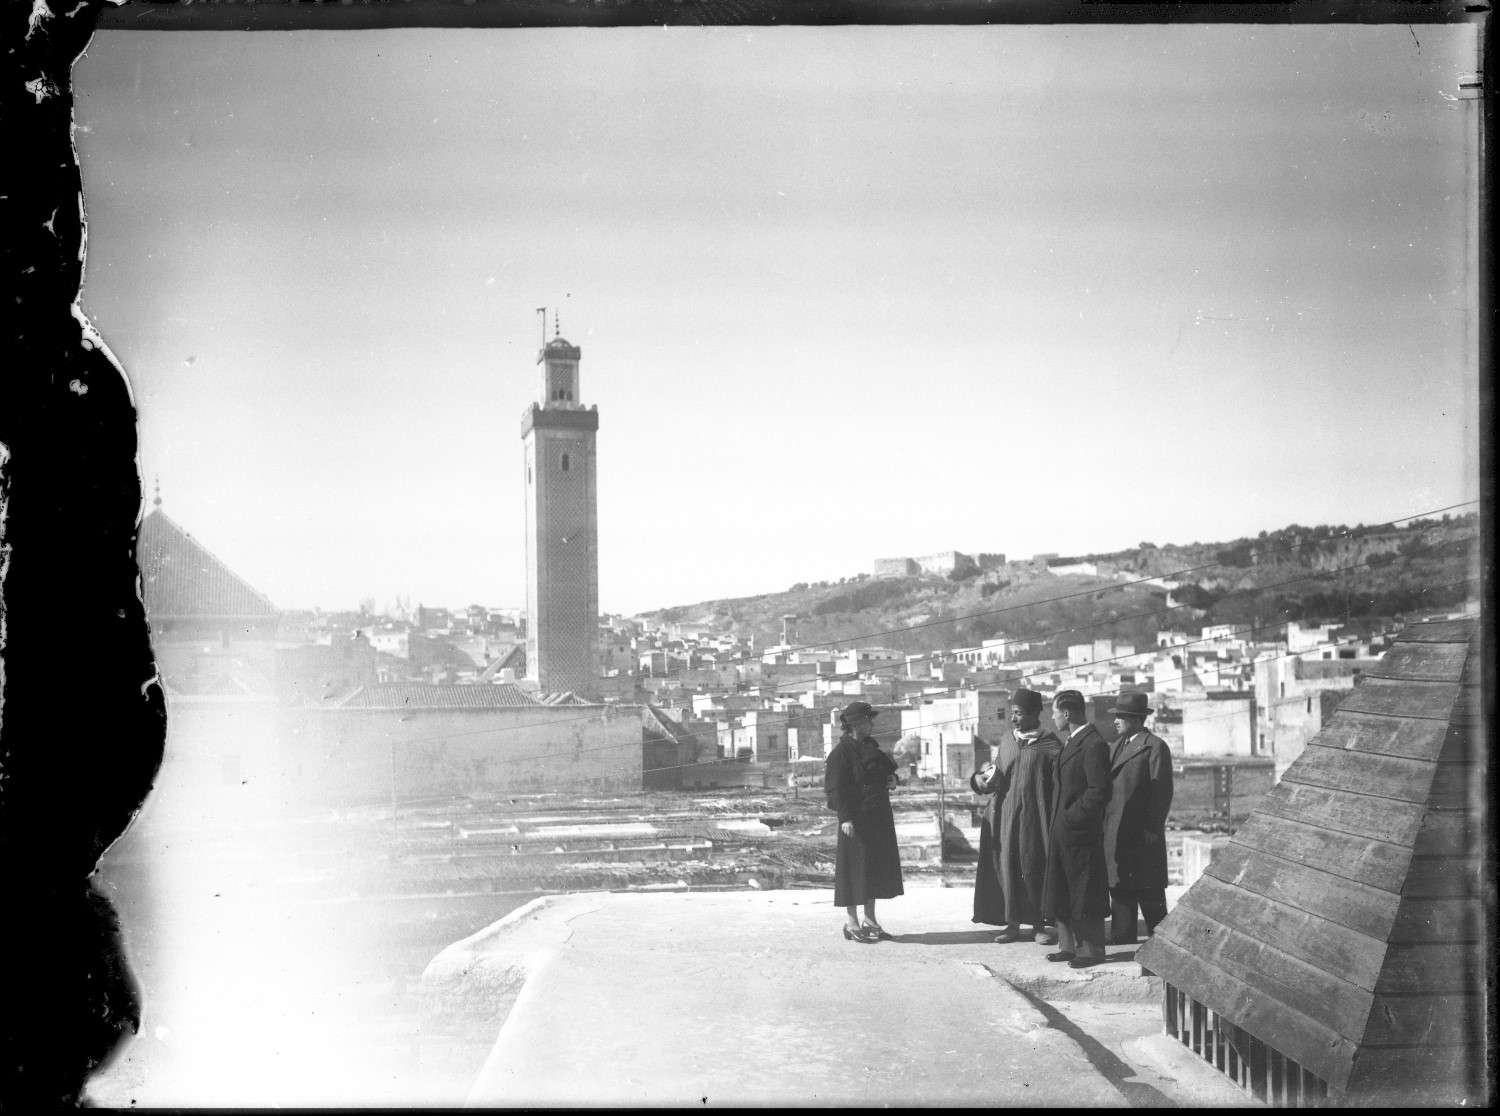 Jami' al-Qarawiyyin - The minaret of Jami' al-Qarawiyyin, with a group of men in the foreground.